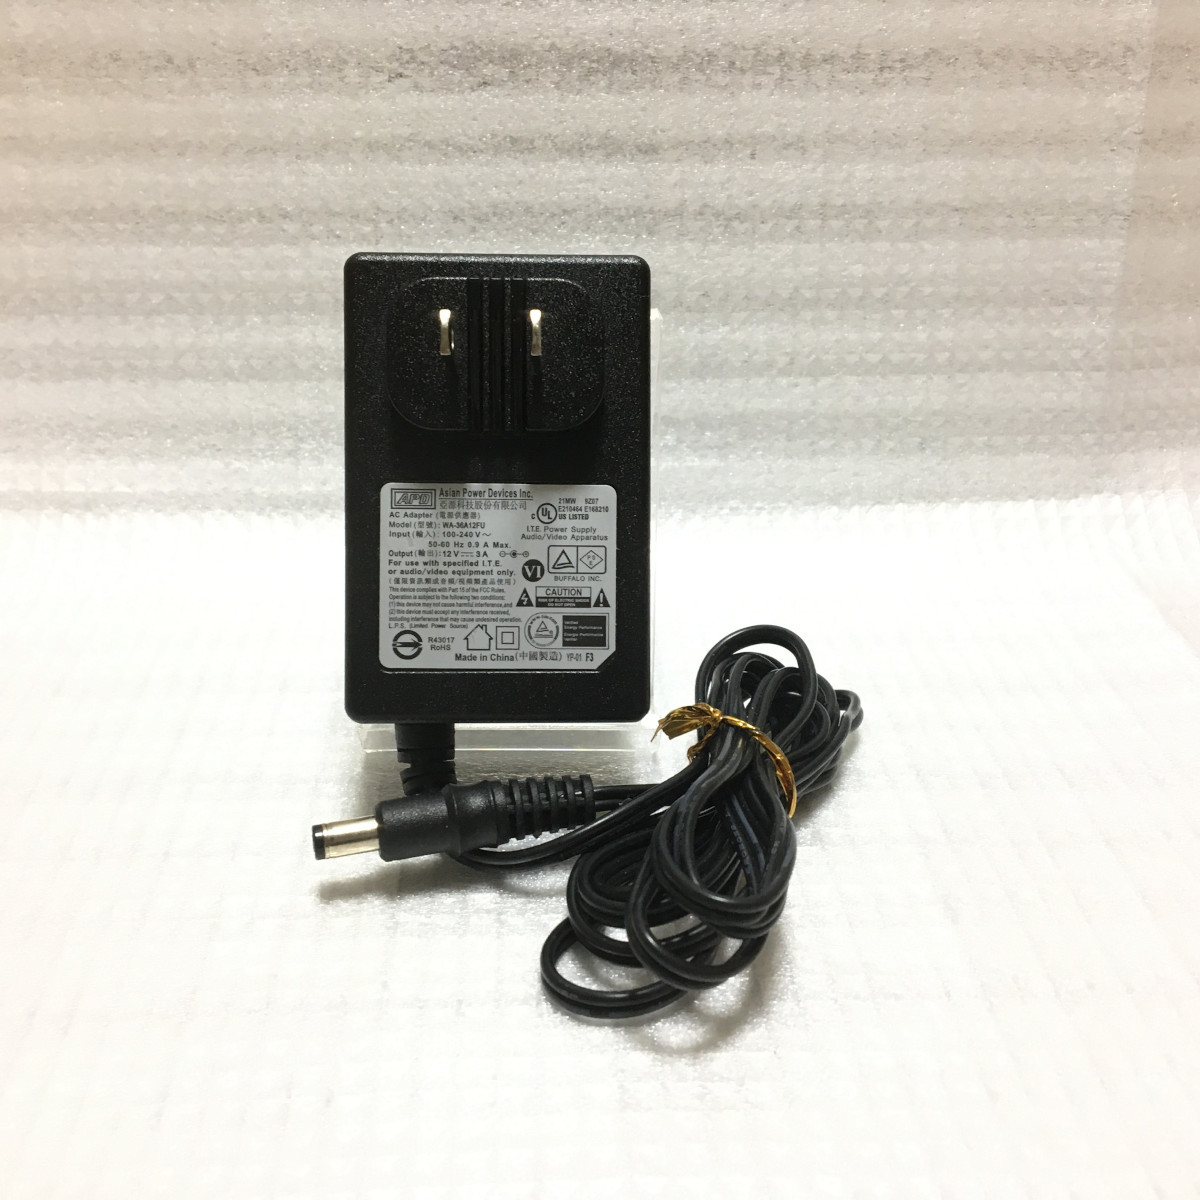 BUFFALO original AC adaptor WA-36A12FU DC12V 3A 3.0A power supply